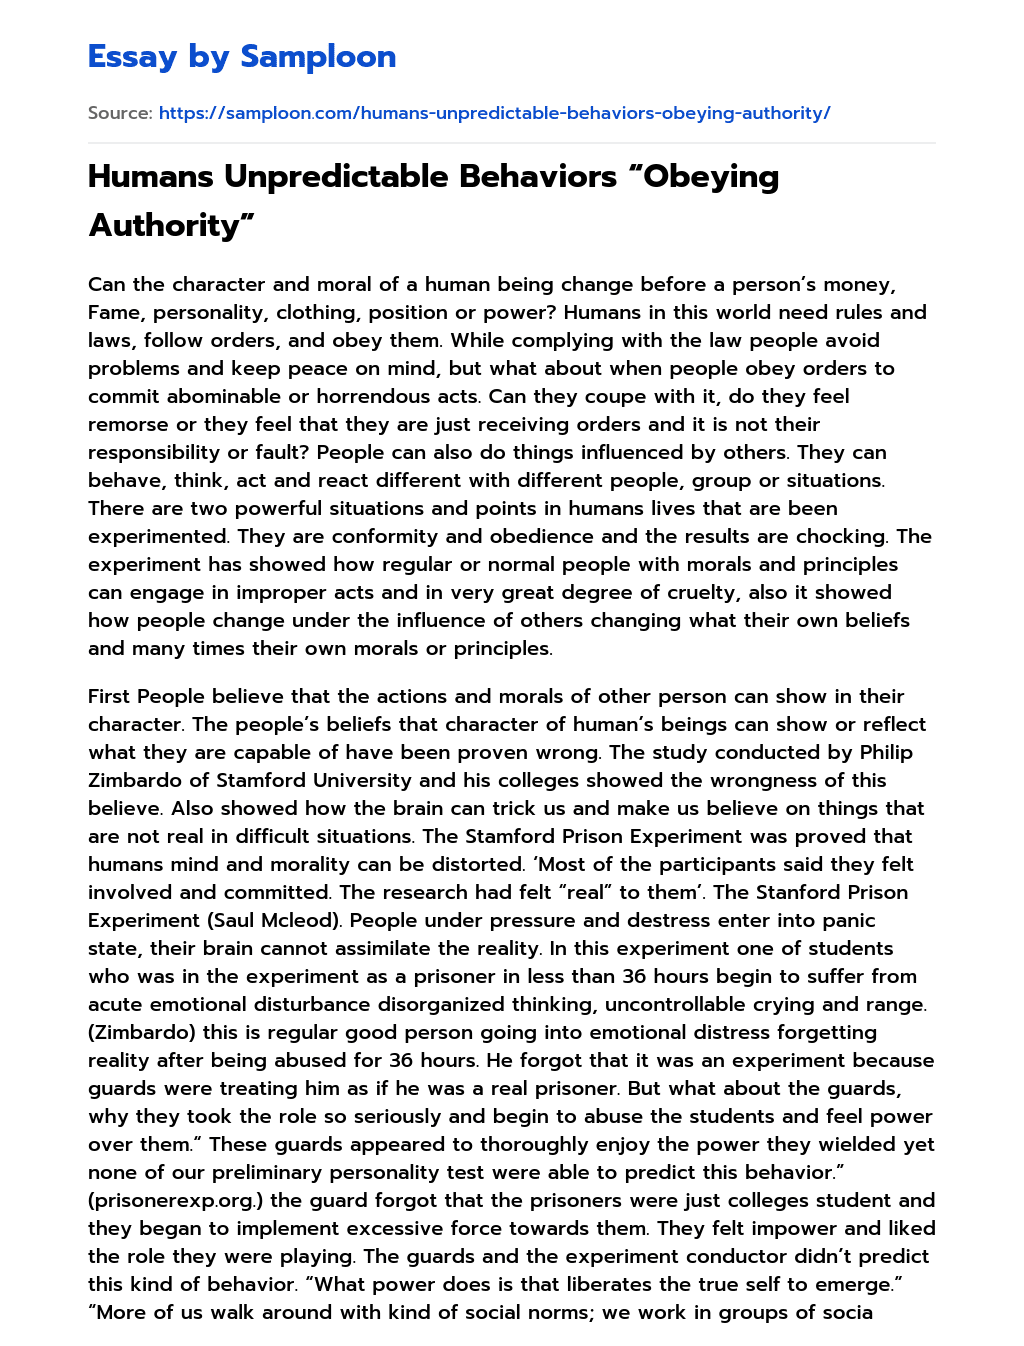 Humans Unpredictable Behaviors “Obeying Authority” essay